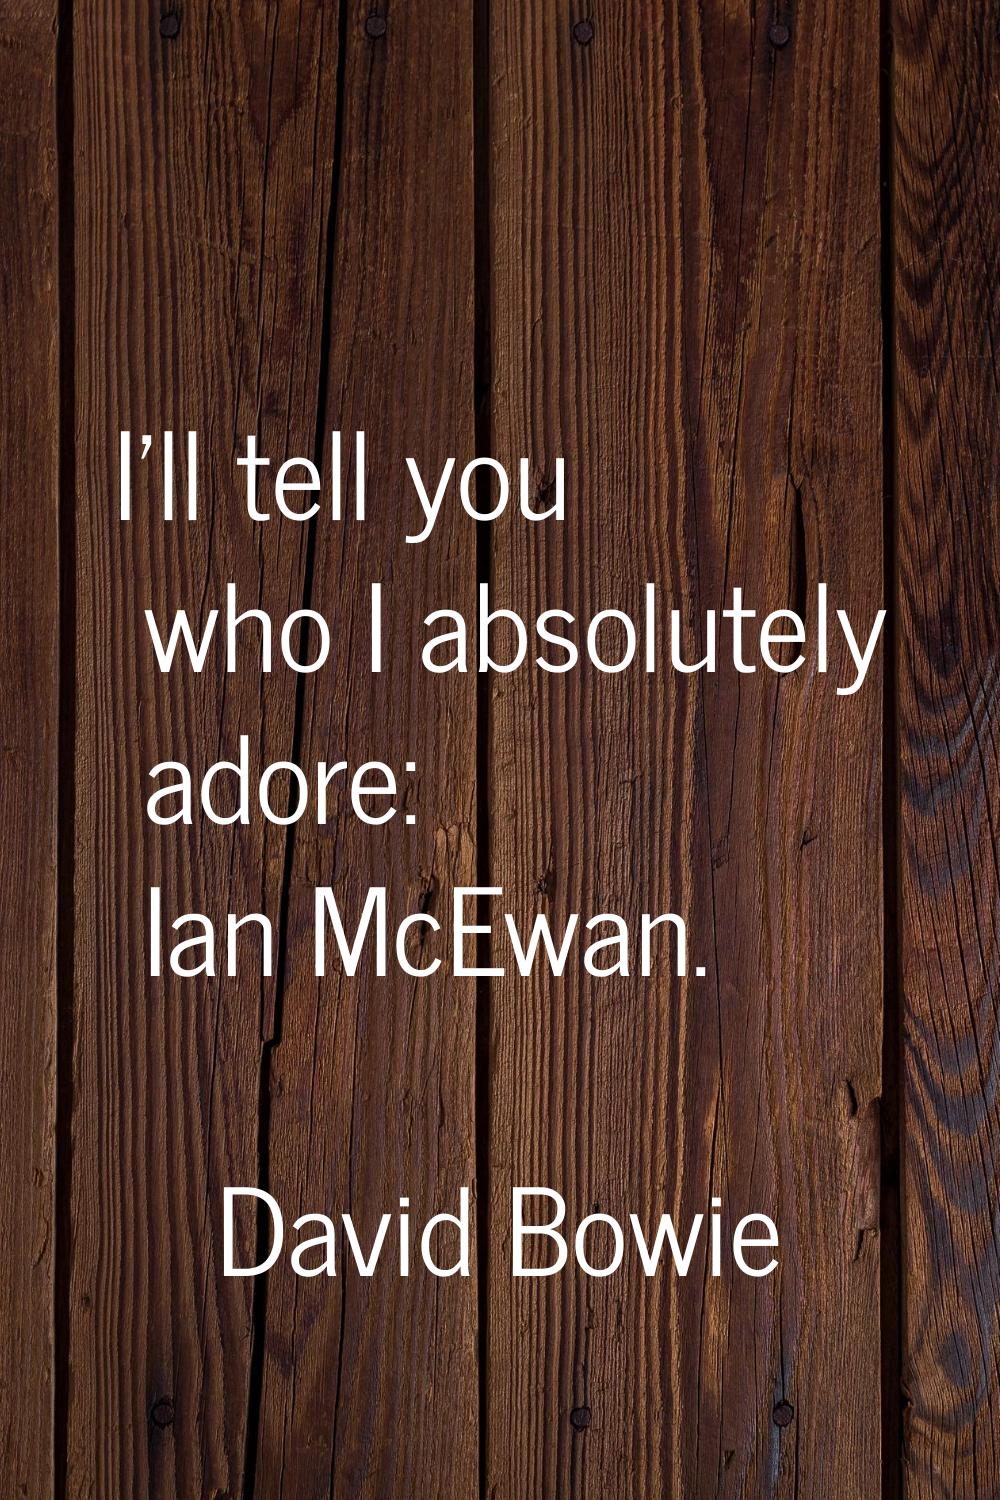 I'll tell you who I absolutely adore: Ian McEwan.